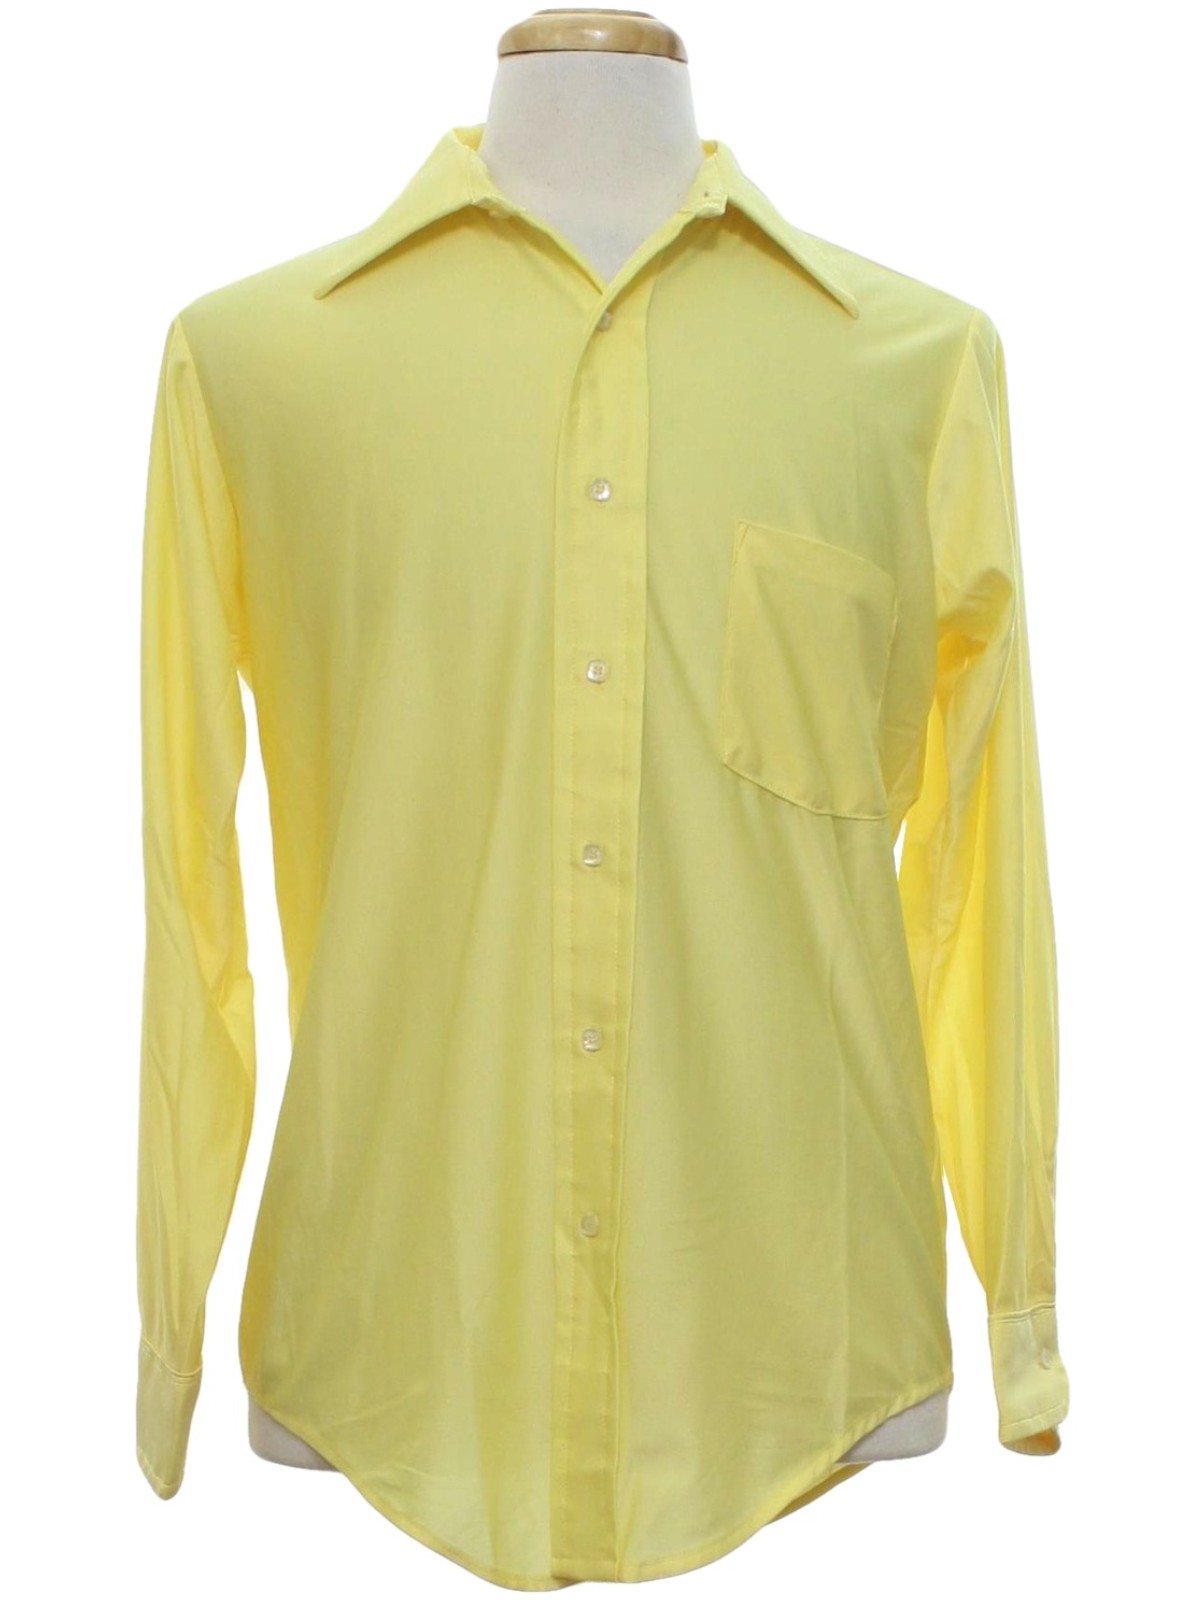 Van Heusen 70's Vintage Disco Shirt: 70s -Van Heusen- Mens shiny bright ...